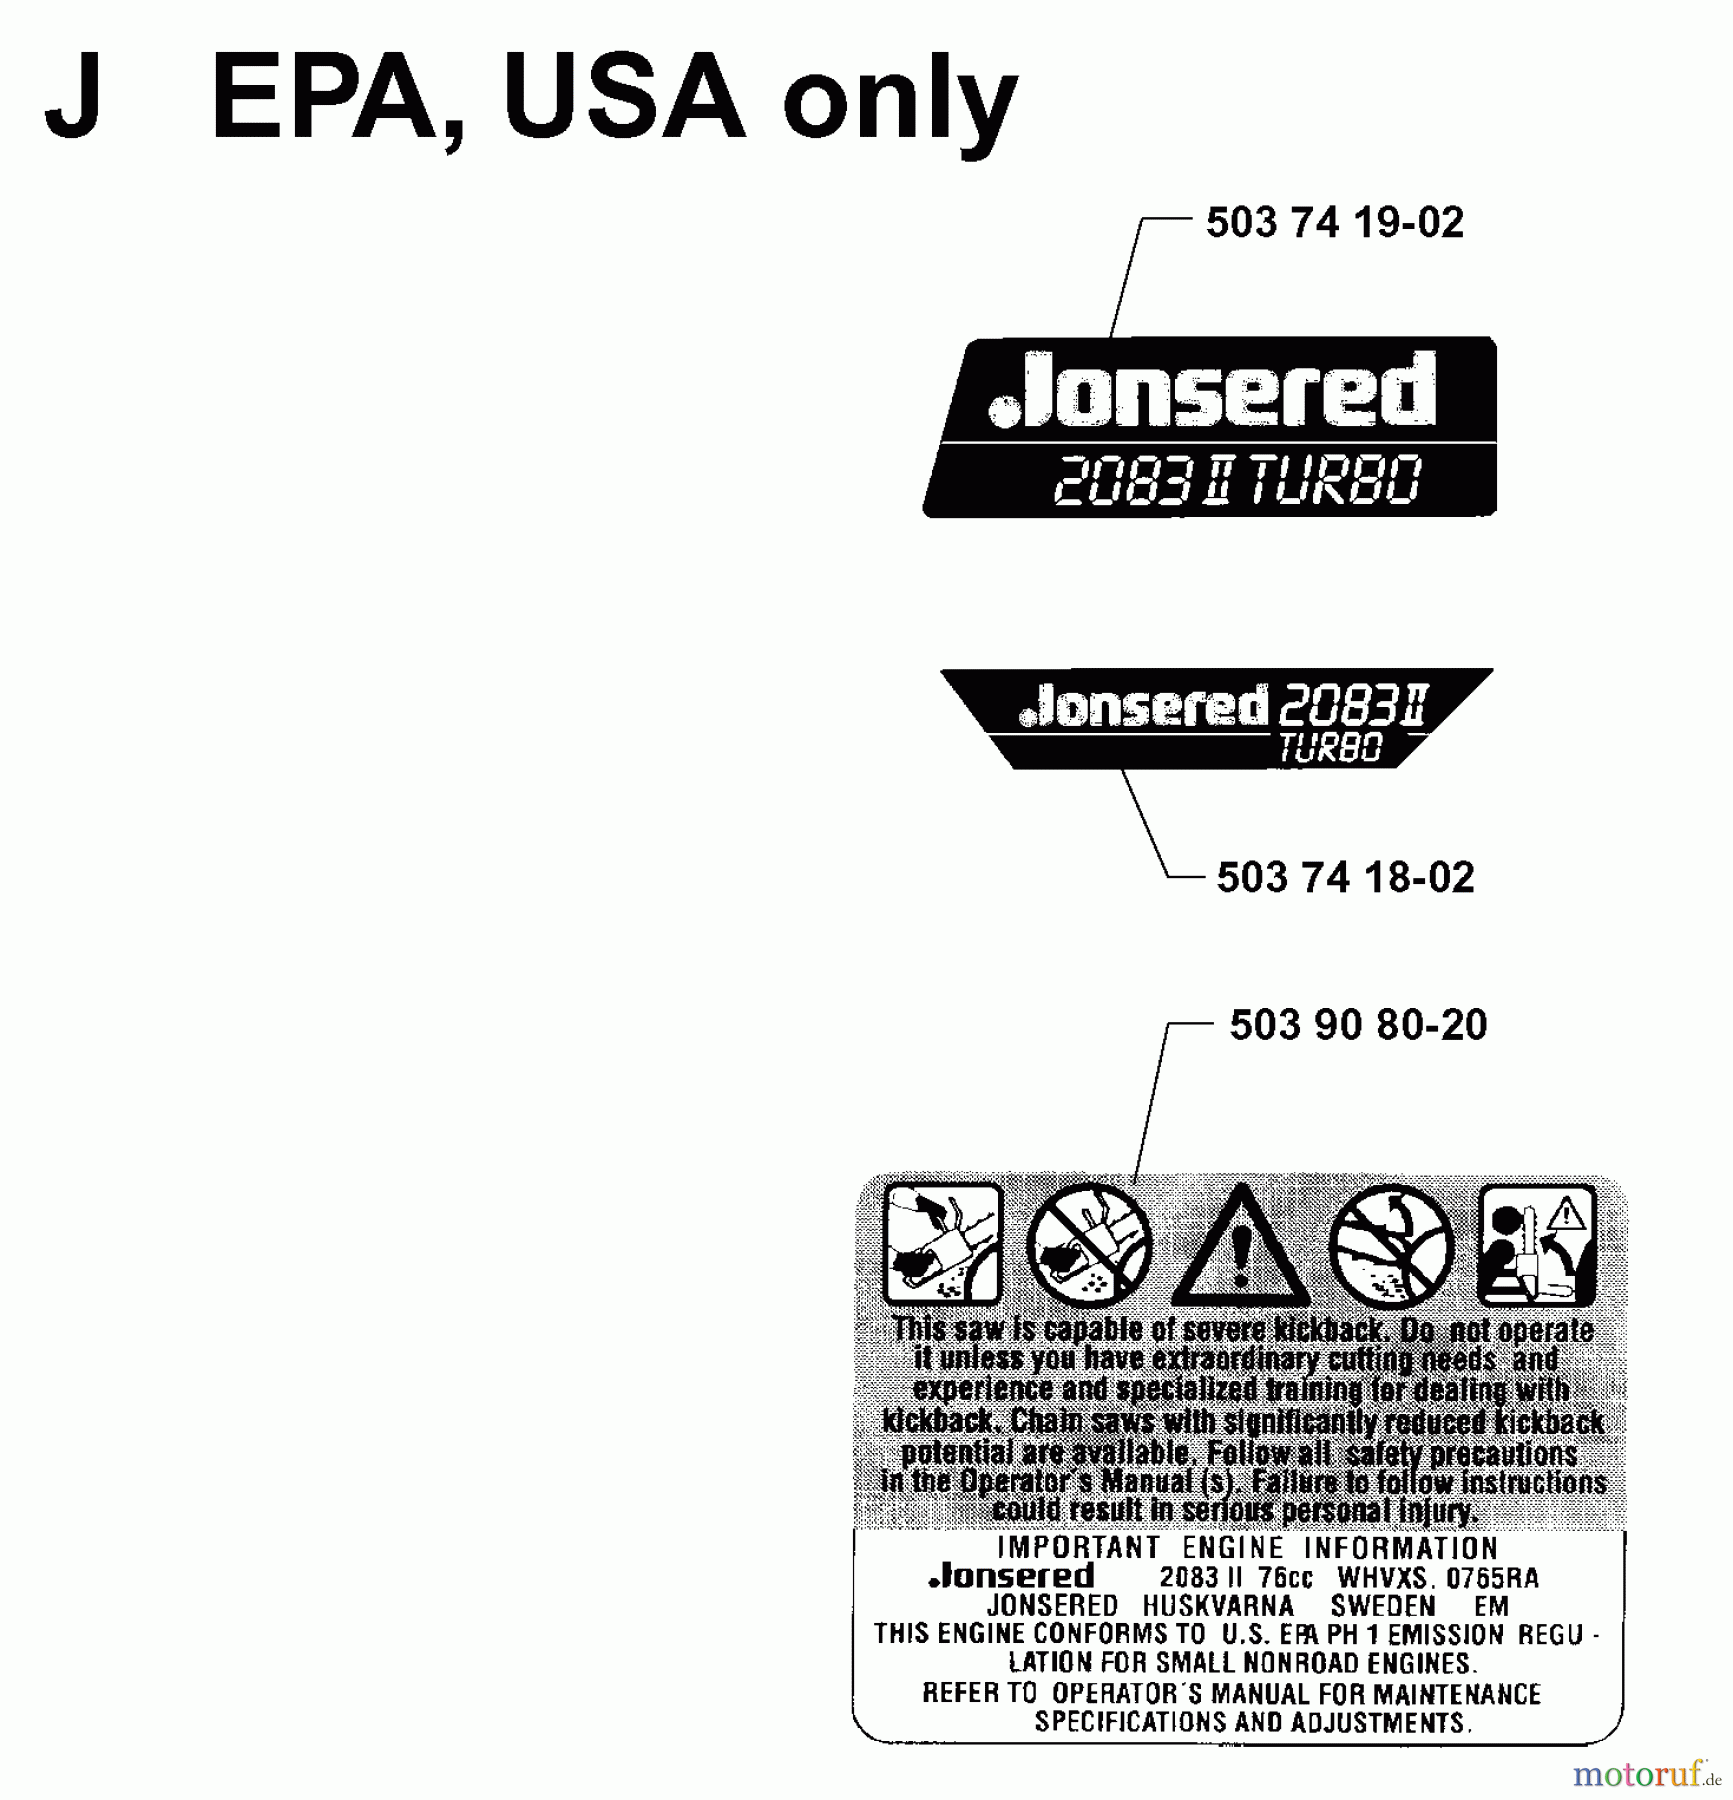  Jonsered Motorsägen 2083 II EPA - Jonsered Chainsaw (1998-09) DECALS #1